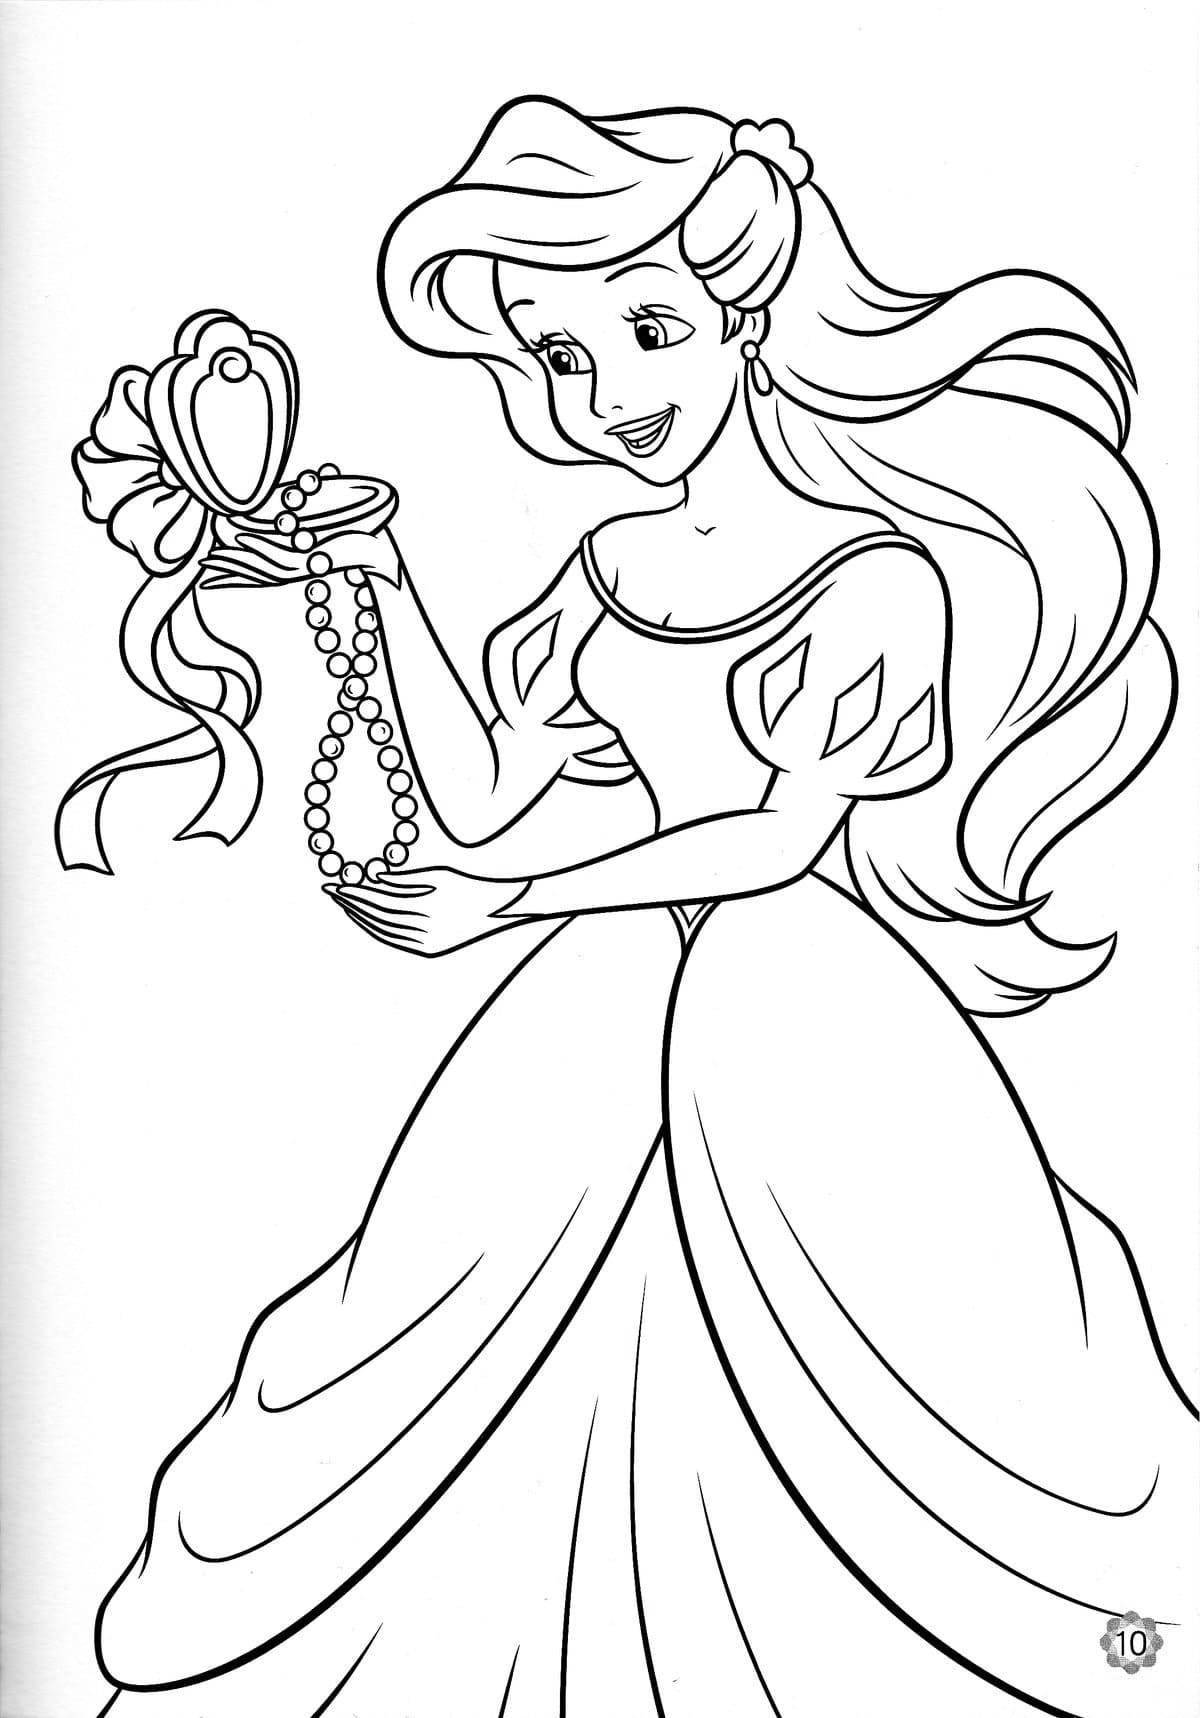 Great princess coloring book